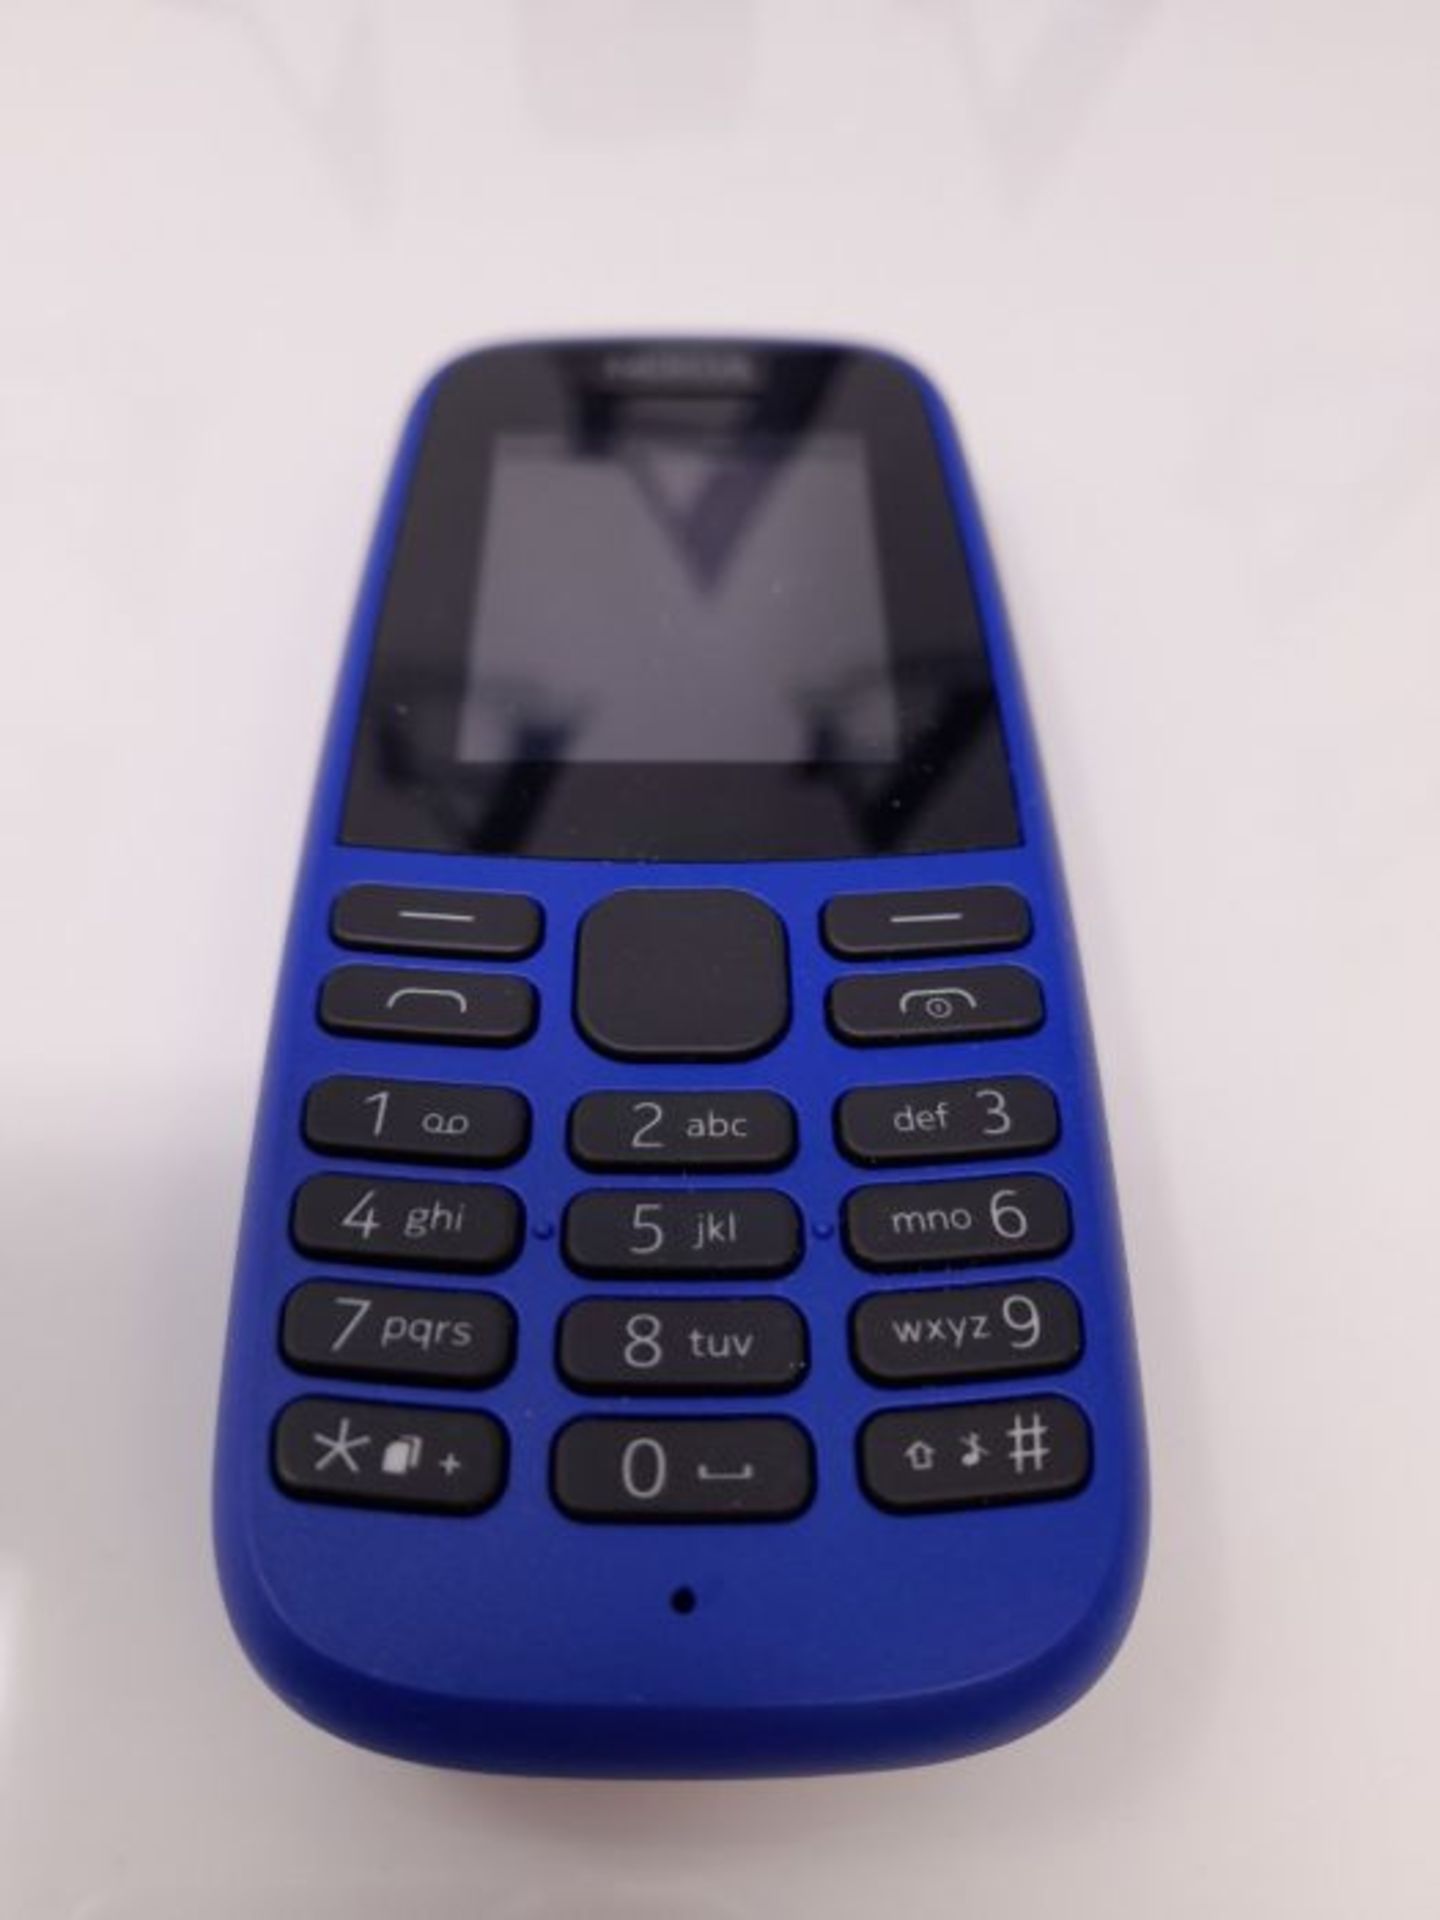 Nokia 105 Mobiltelefon (1, 8 Zoll Farbdisplay, FM Radio, 4 MB ROM, Dual-Sim) Blau, Ver - Image 3 of 3